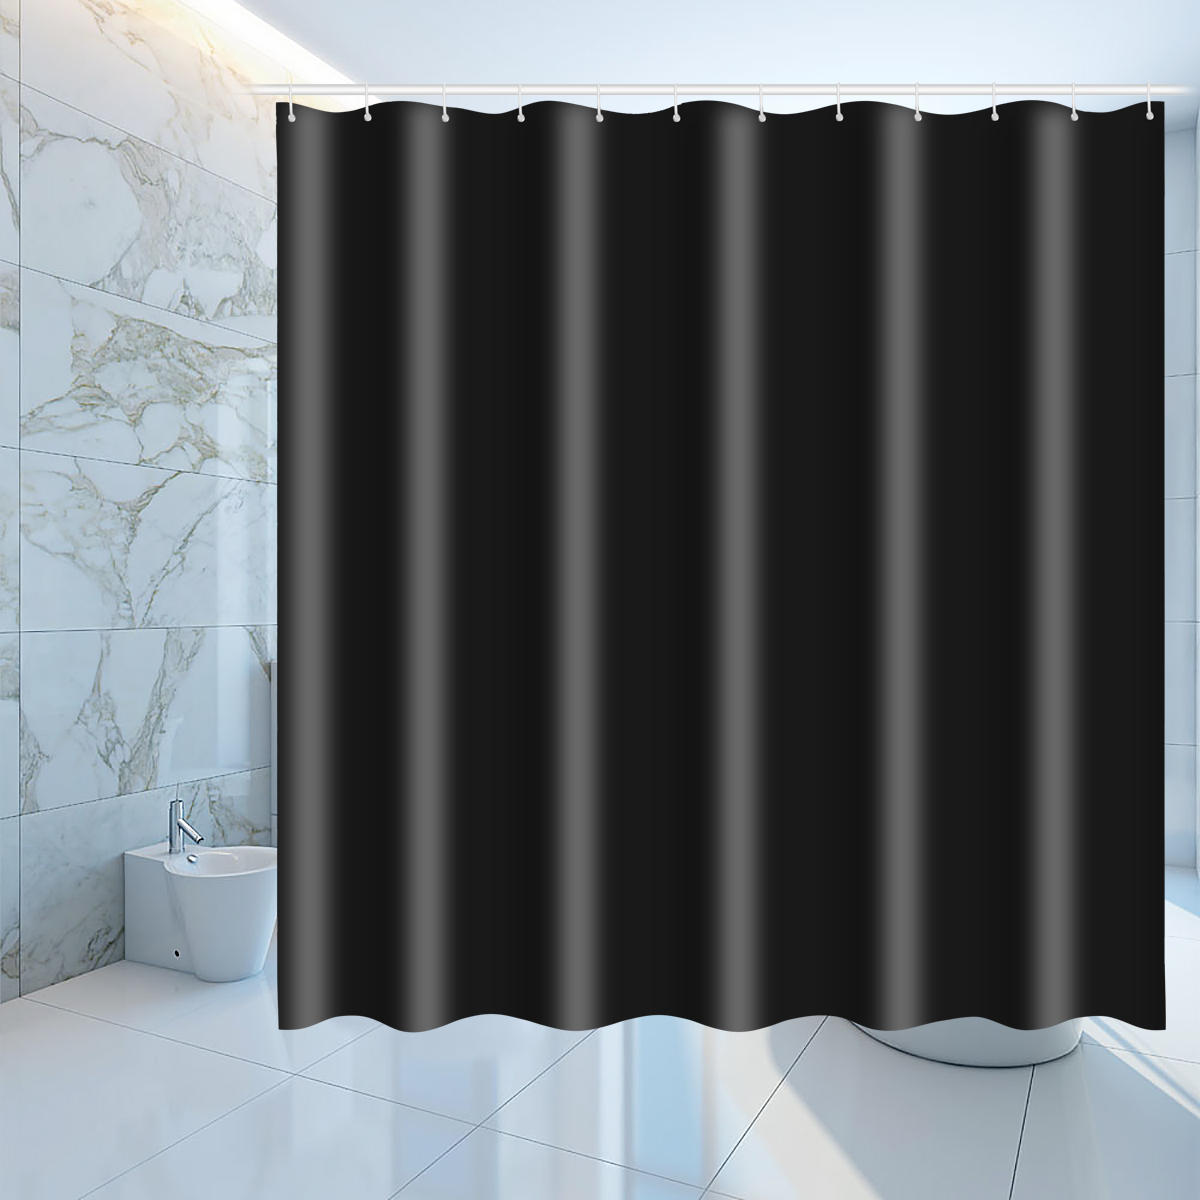 Waterproof black shower window curtain bathroom drape hotel home decor